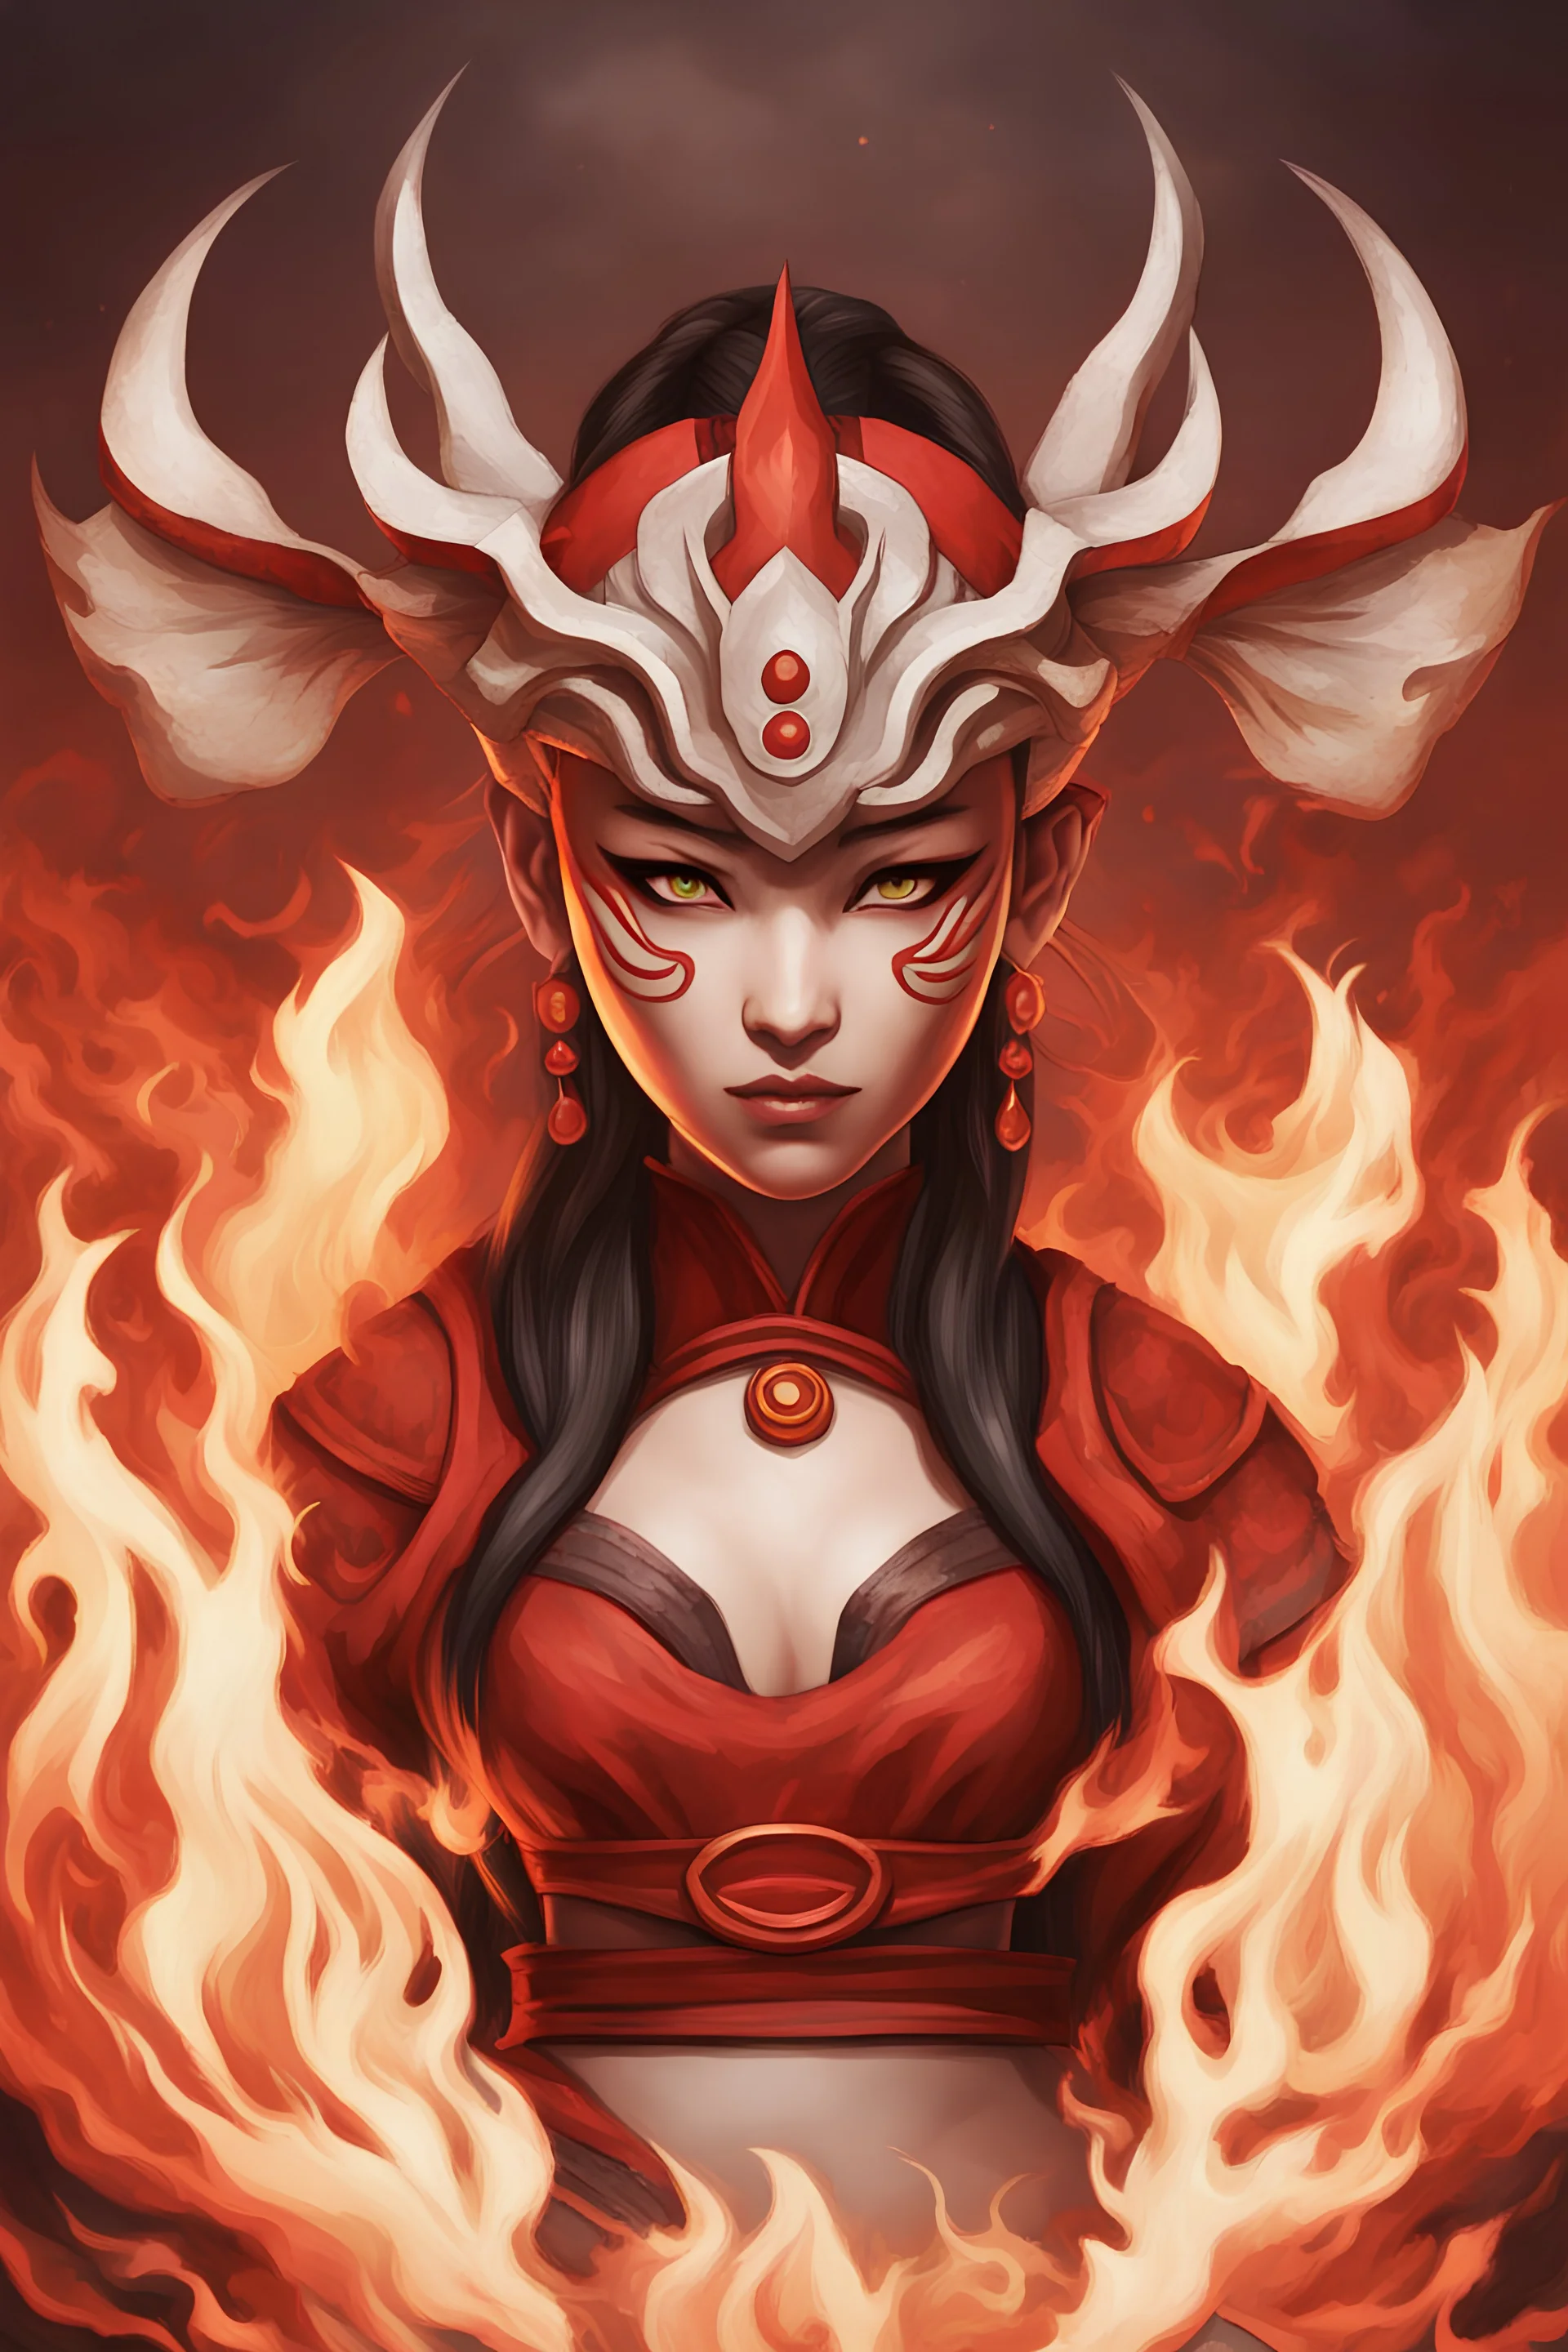 Fire nation female, asian, oni mask